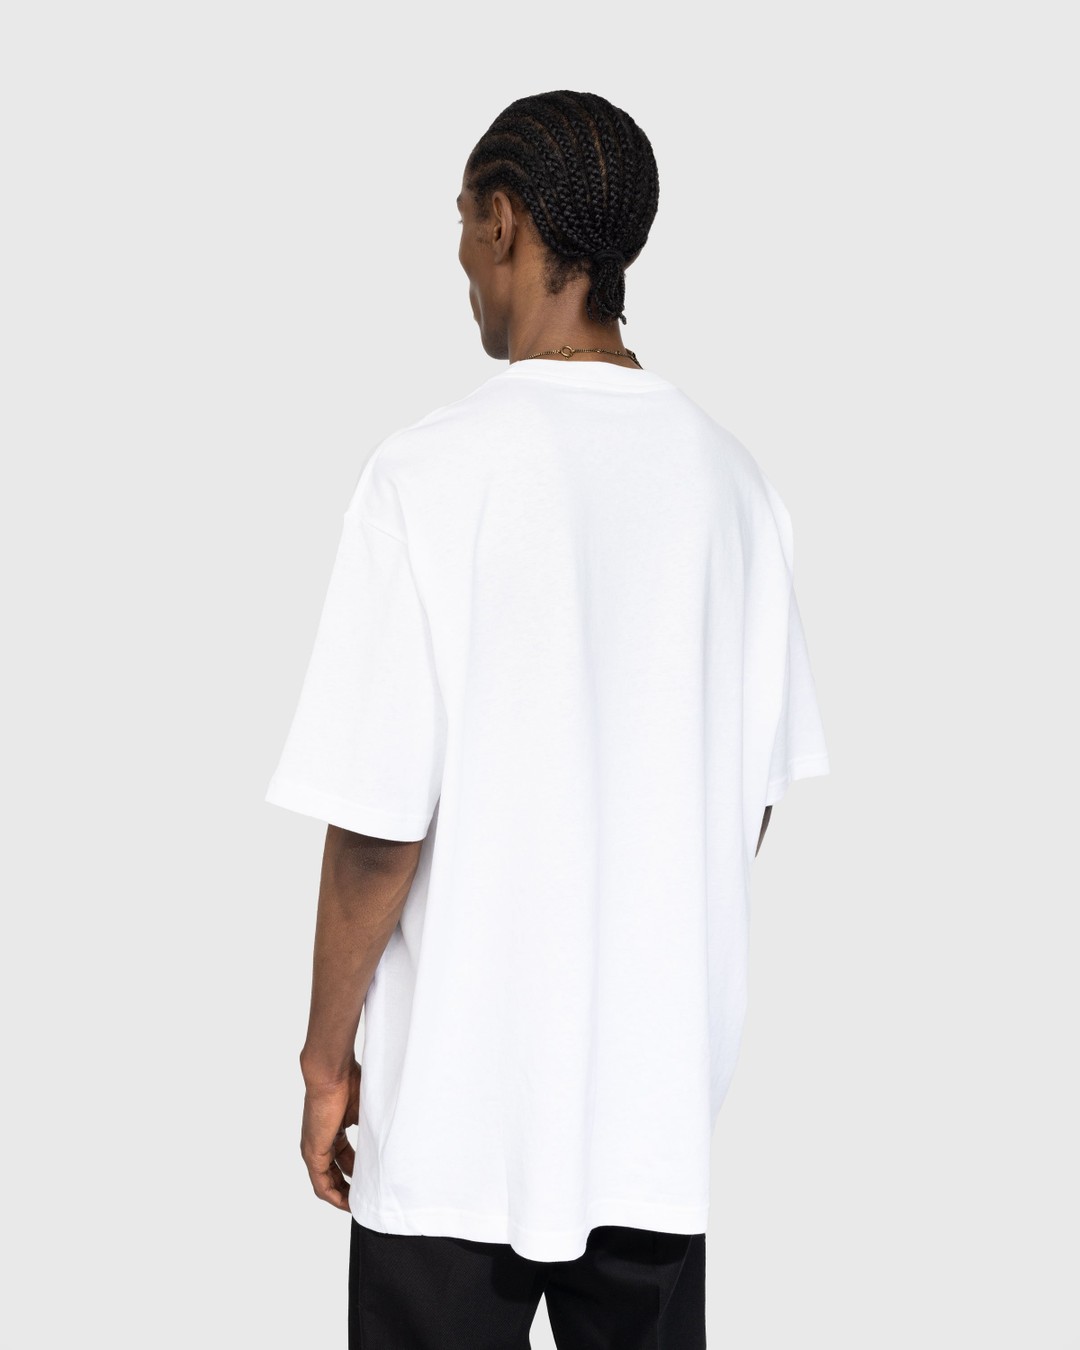 Acne Studios – Floragatan 13 Screenprint T-Shirt White - T-shirts - White - Image 4